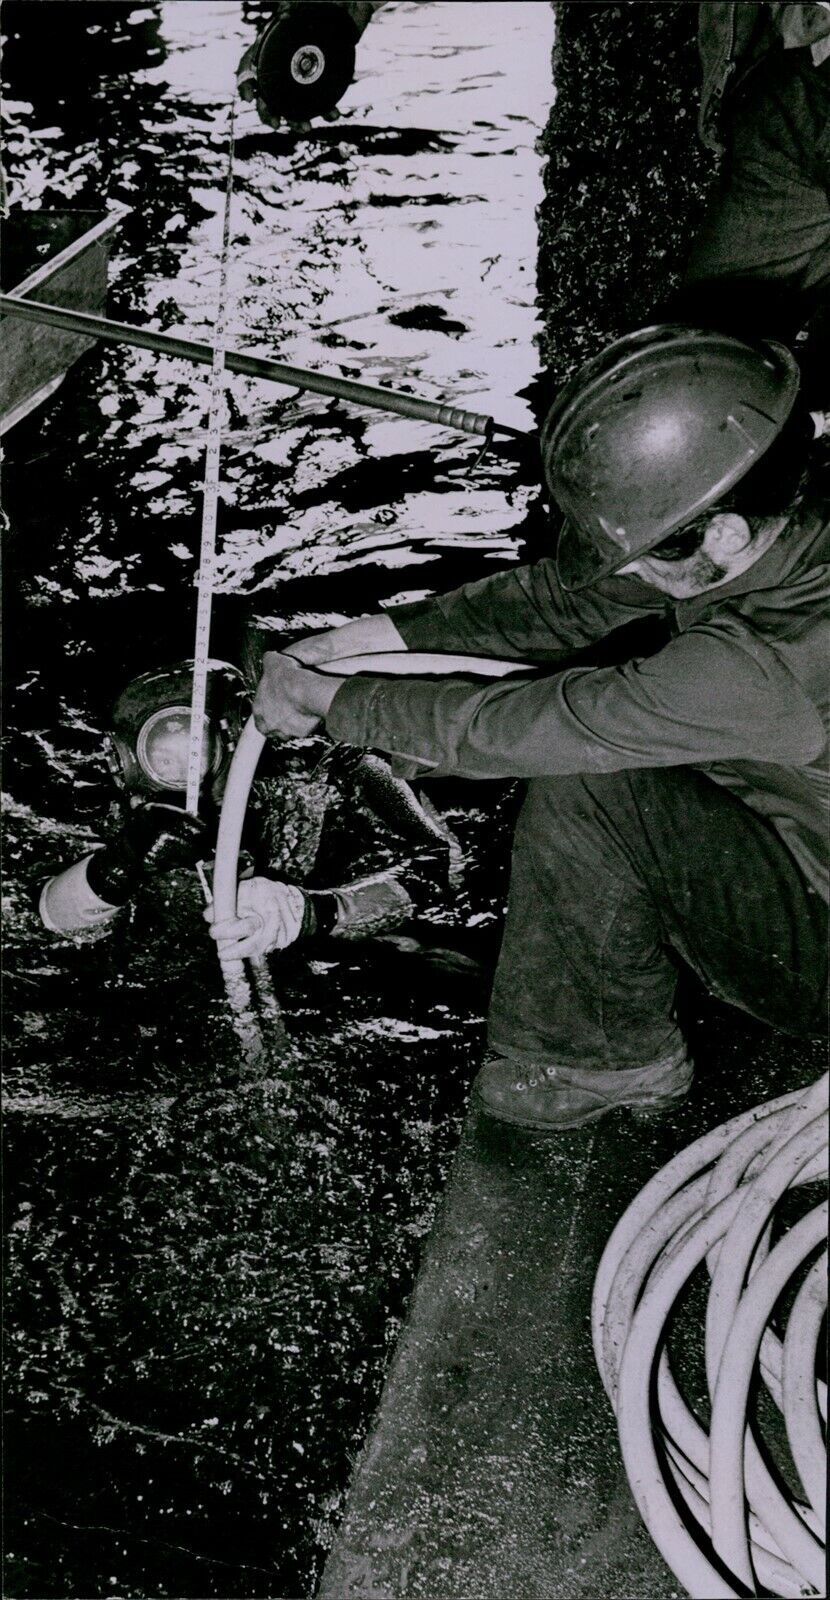 LG880 1971 Original Photo SCUBA DIVER SURFACING Underground Sewage Workers Crew